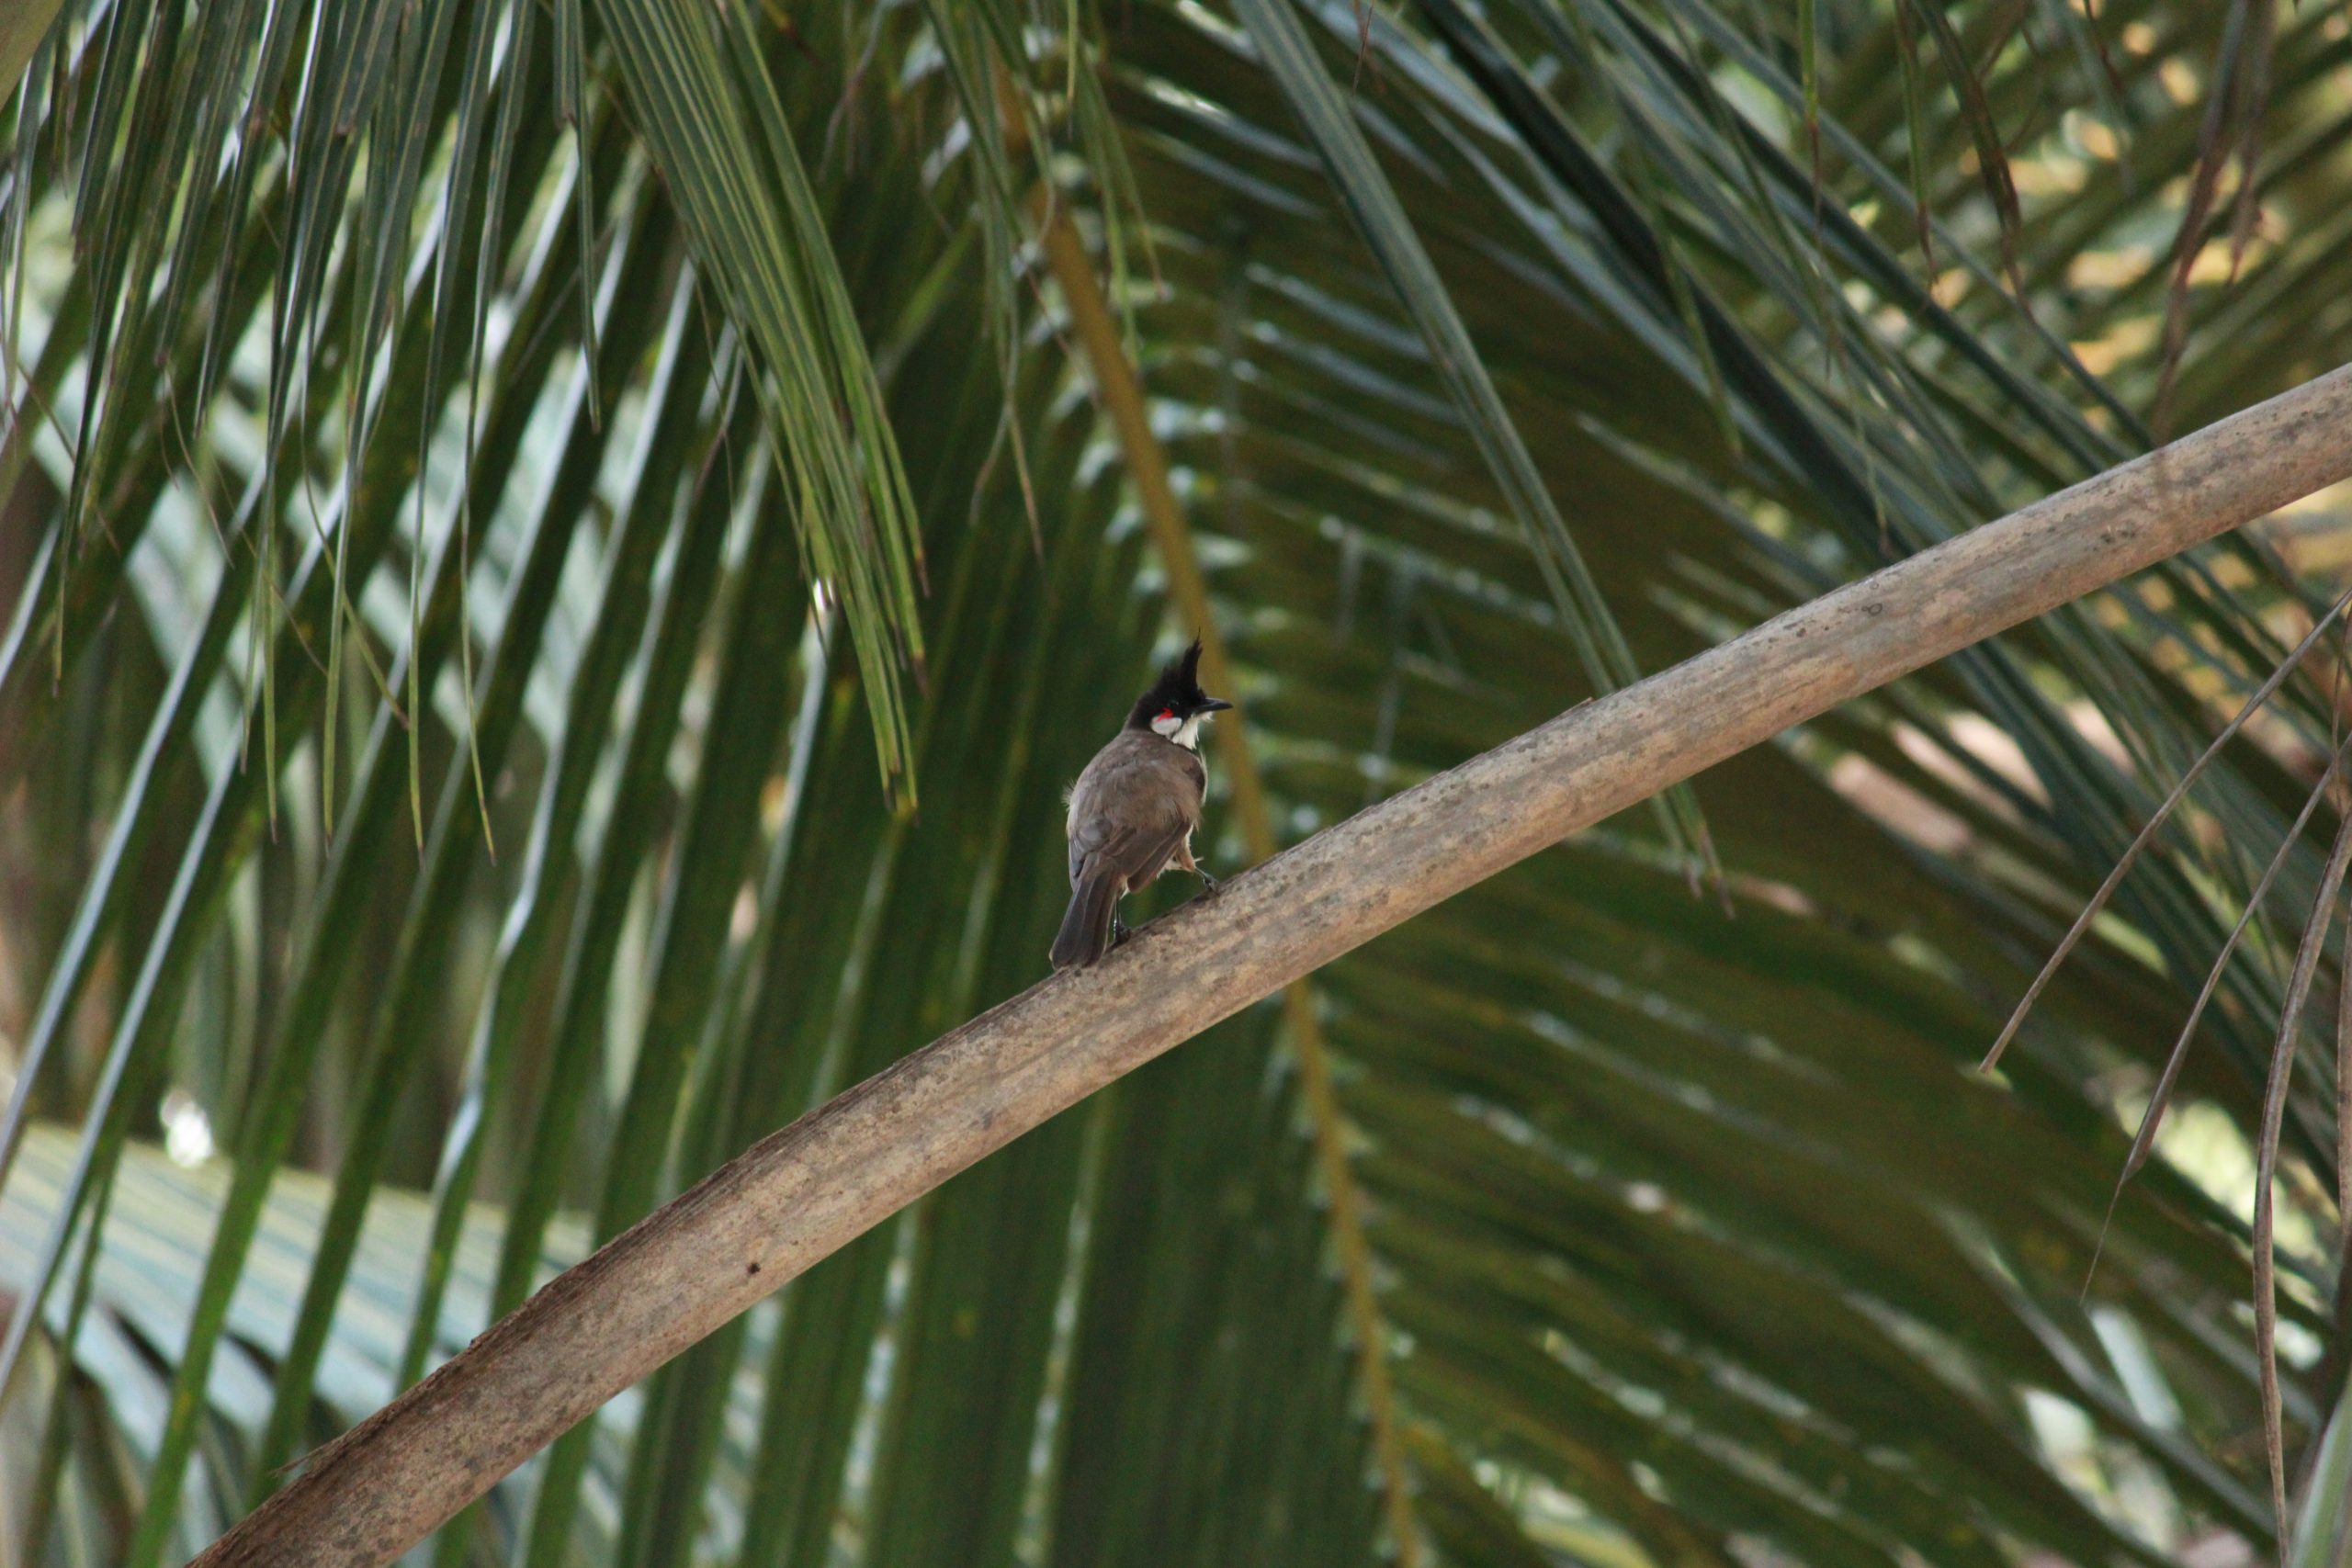 A bird sitting on a tree